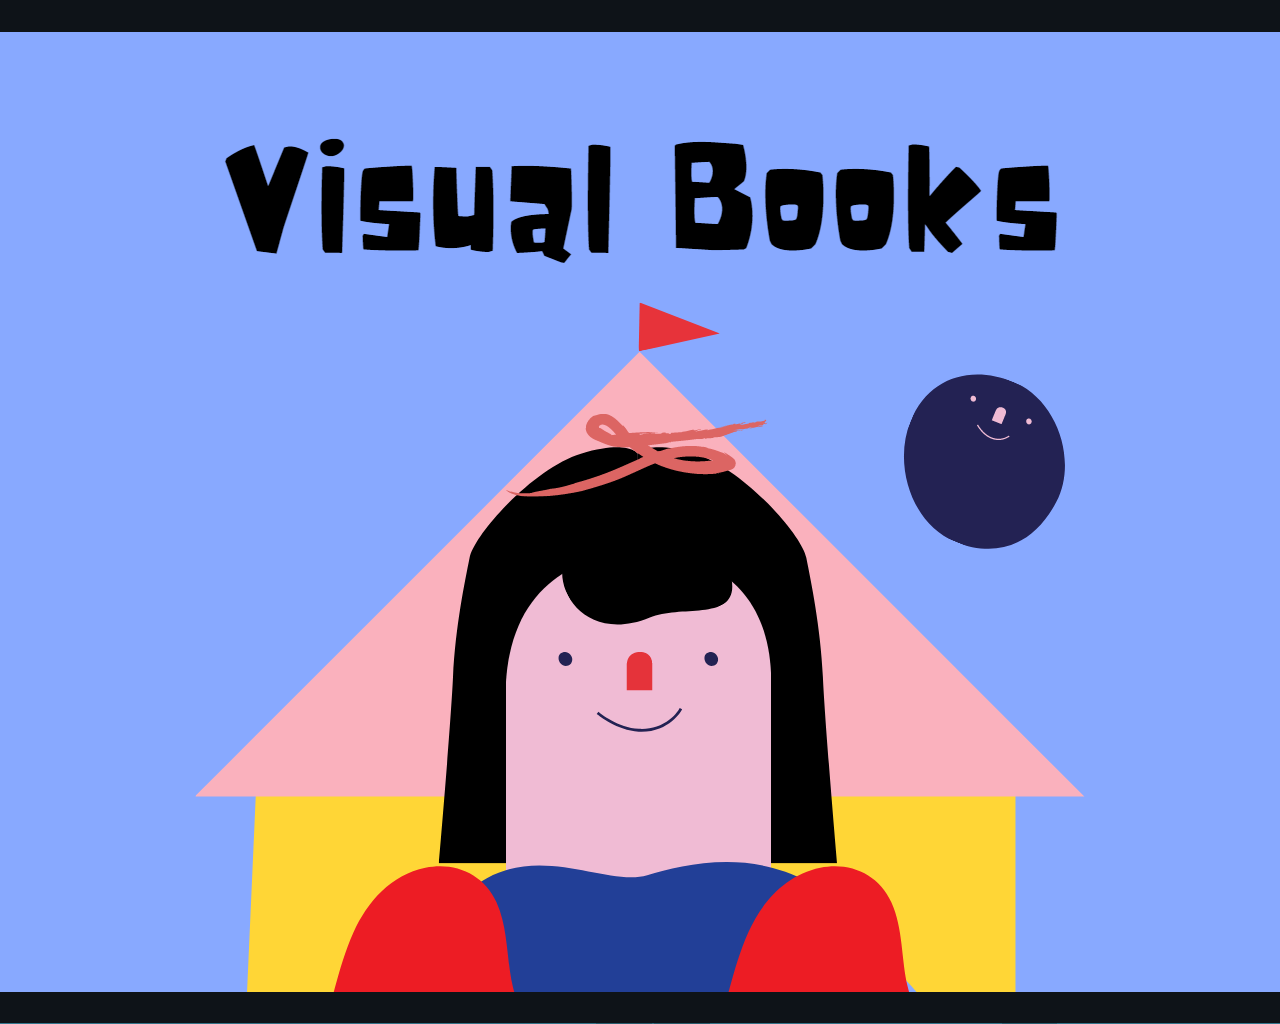 I will create a visual aid book or visualbooks